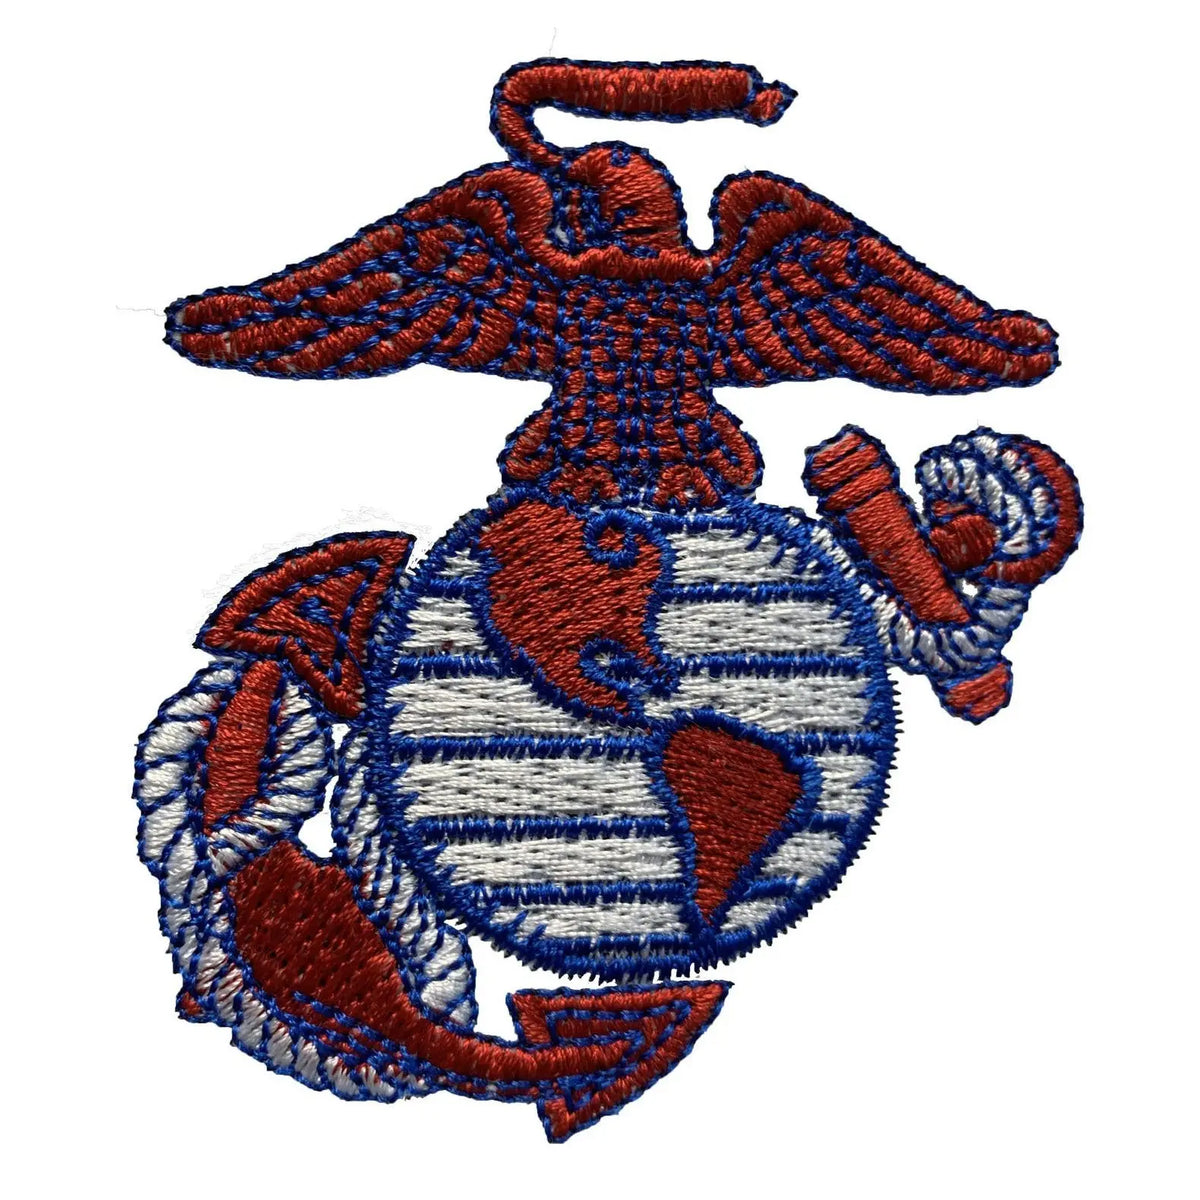 USA EGA Embroidered Polo - Marine Corps Direct